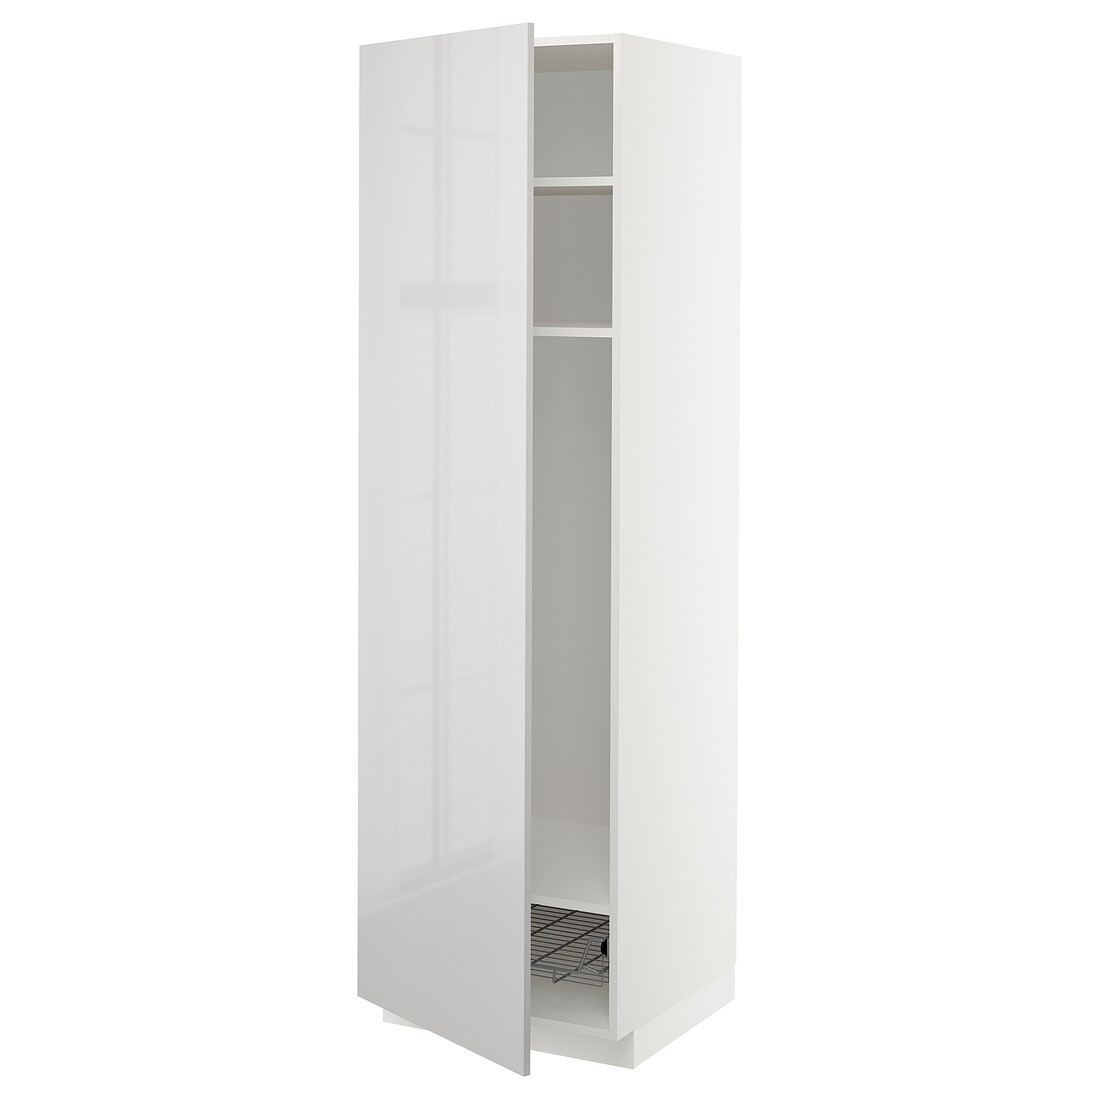 IKEA METOD МЕТОД Шкаф высокий, полки / проволочная корзина, белый / Ringhult светло-серый, 60x60x200 см 39468799 | 394.687.99